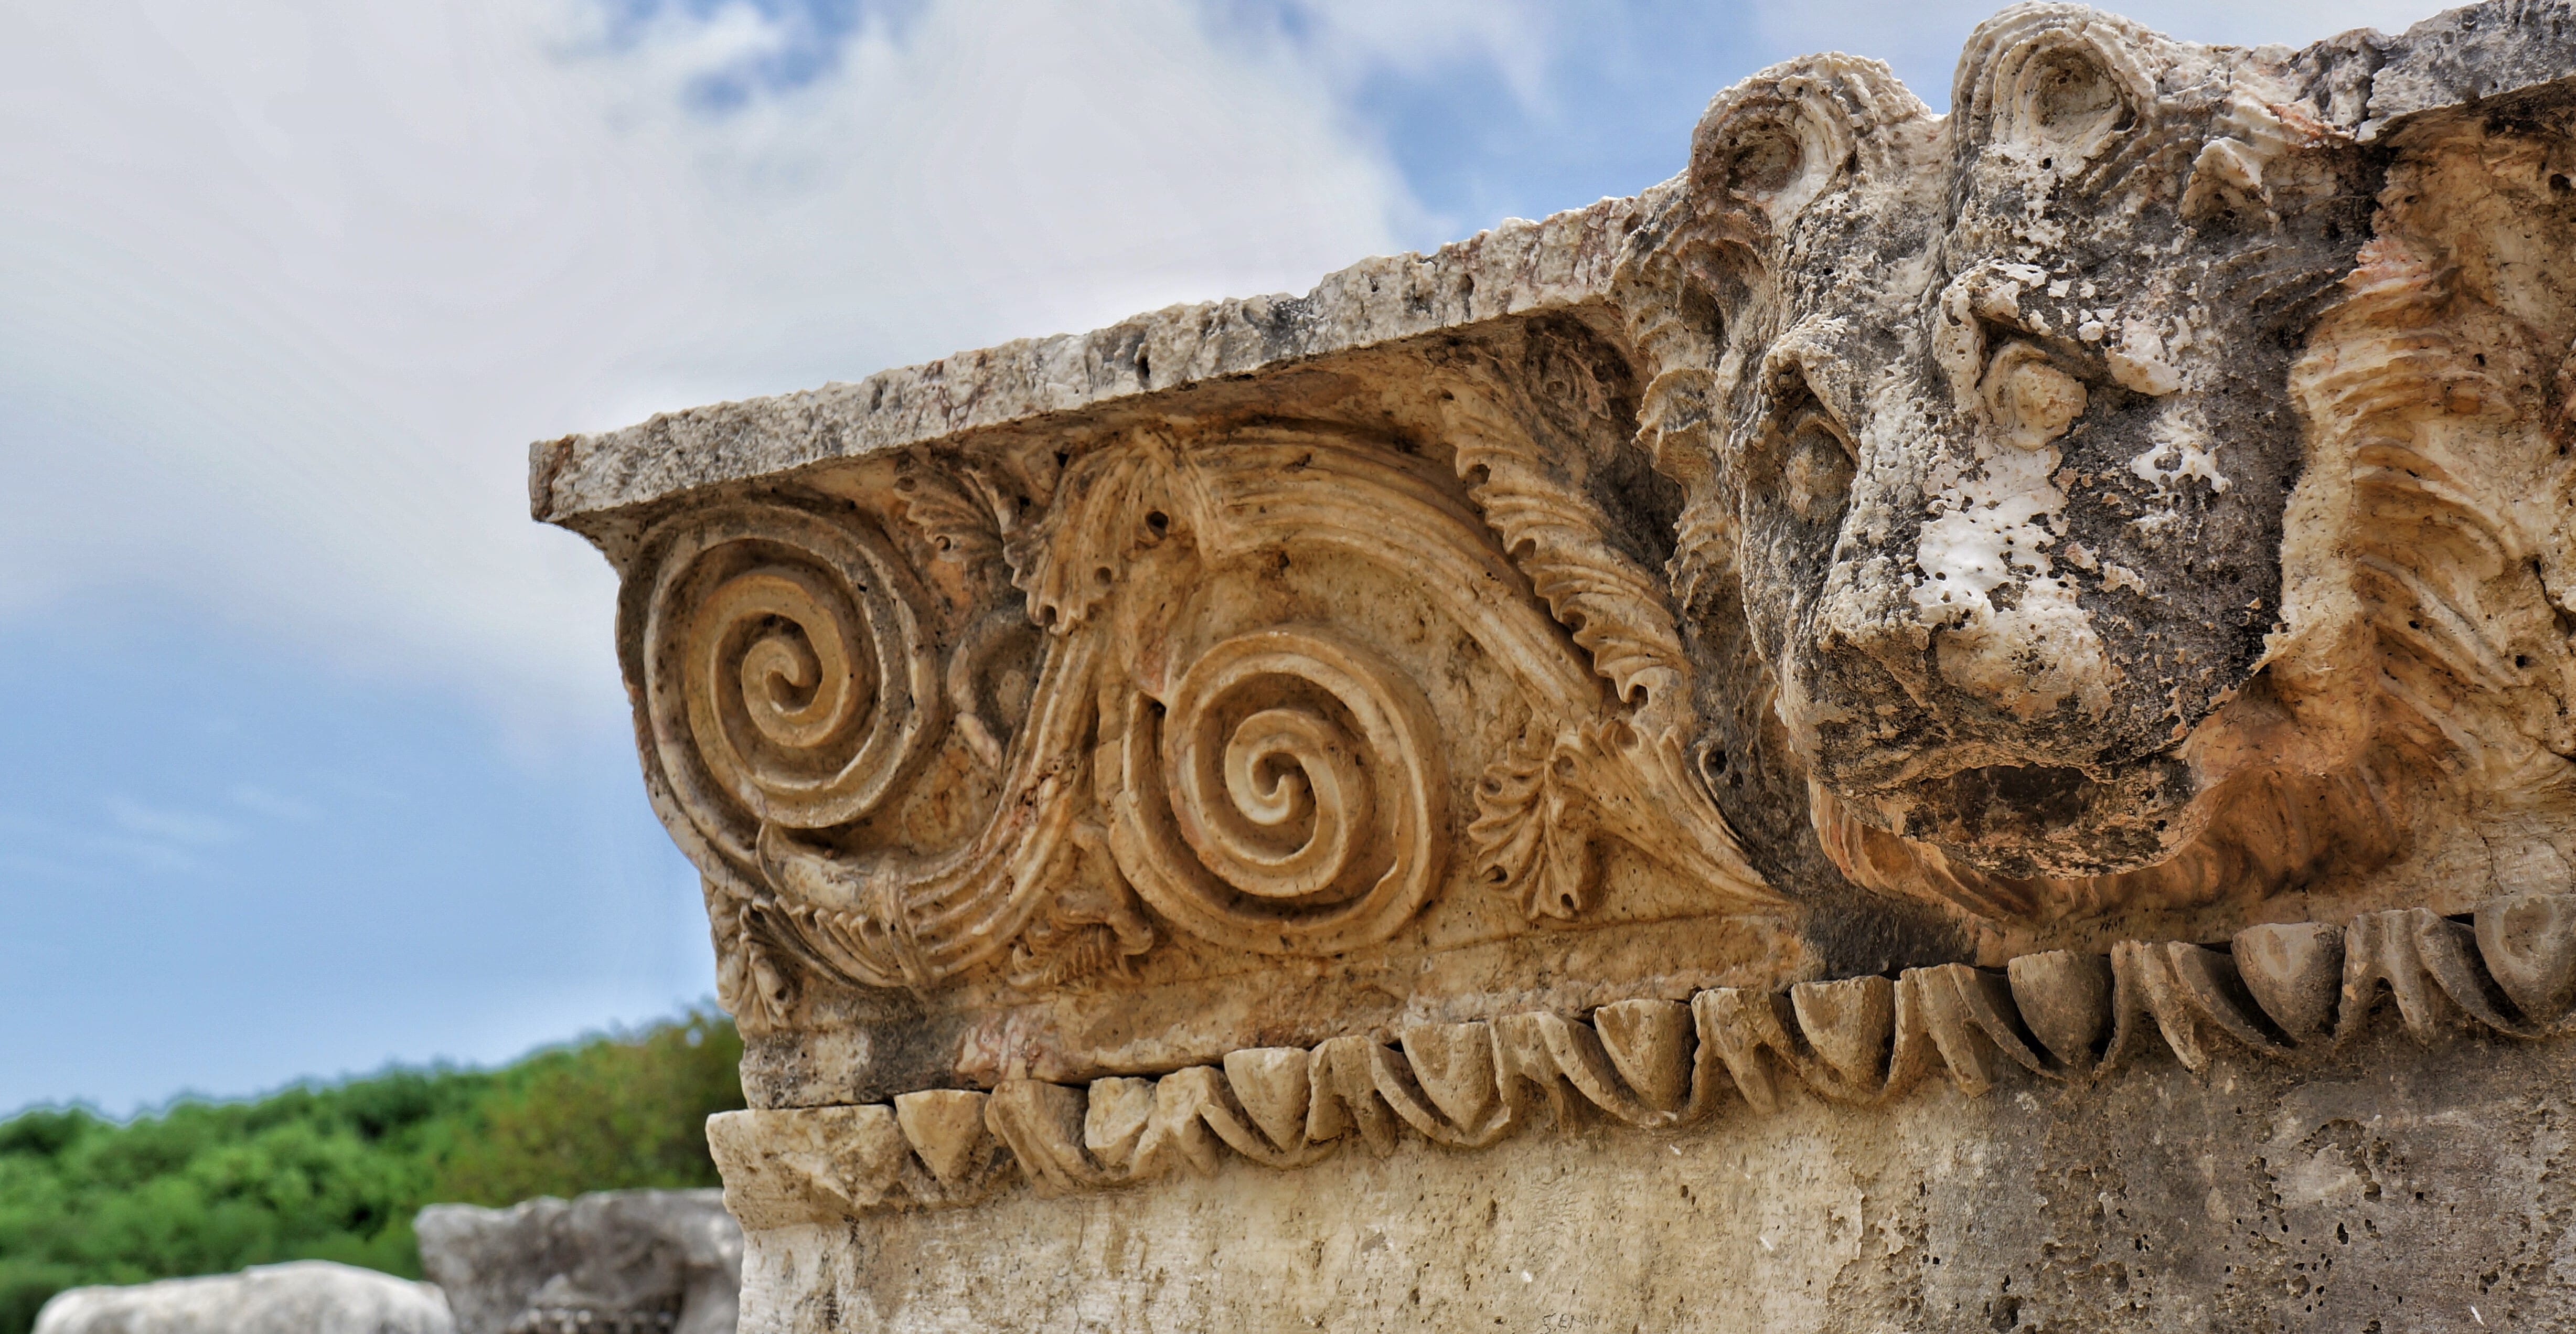 kamenný reliéf s podobiznou lví hlavy s rostlinnými ornamenty na kamenné římse Lýkijského chrámu Xanthos